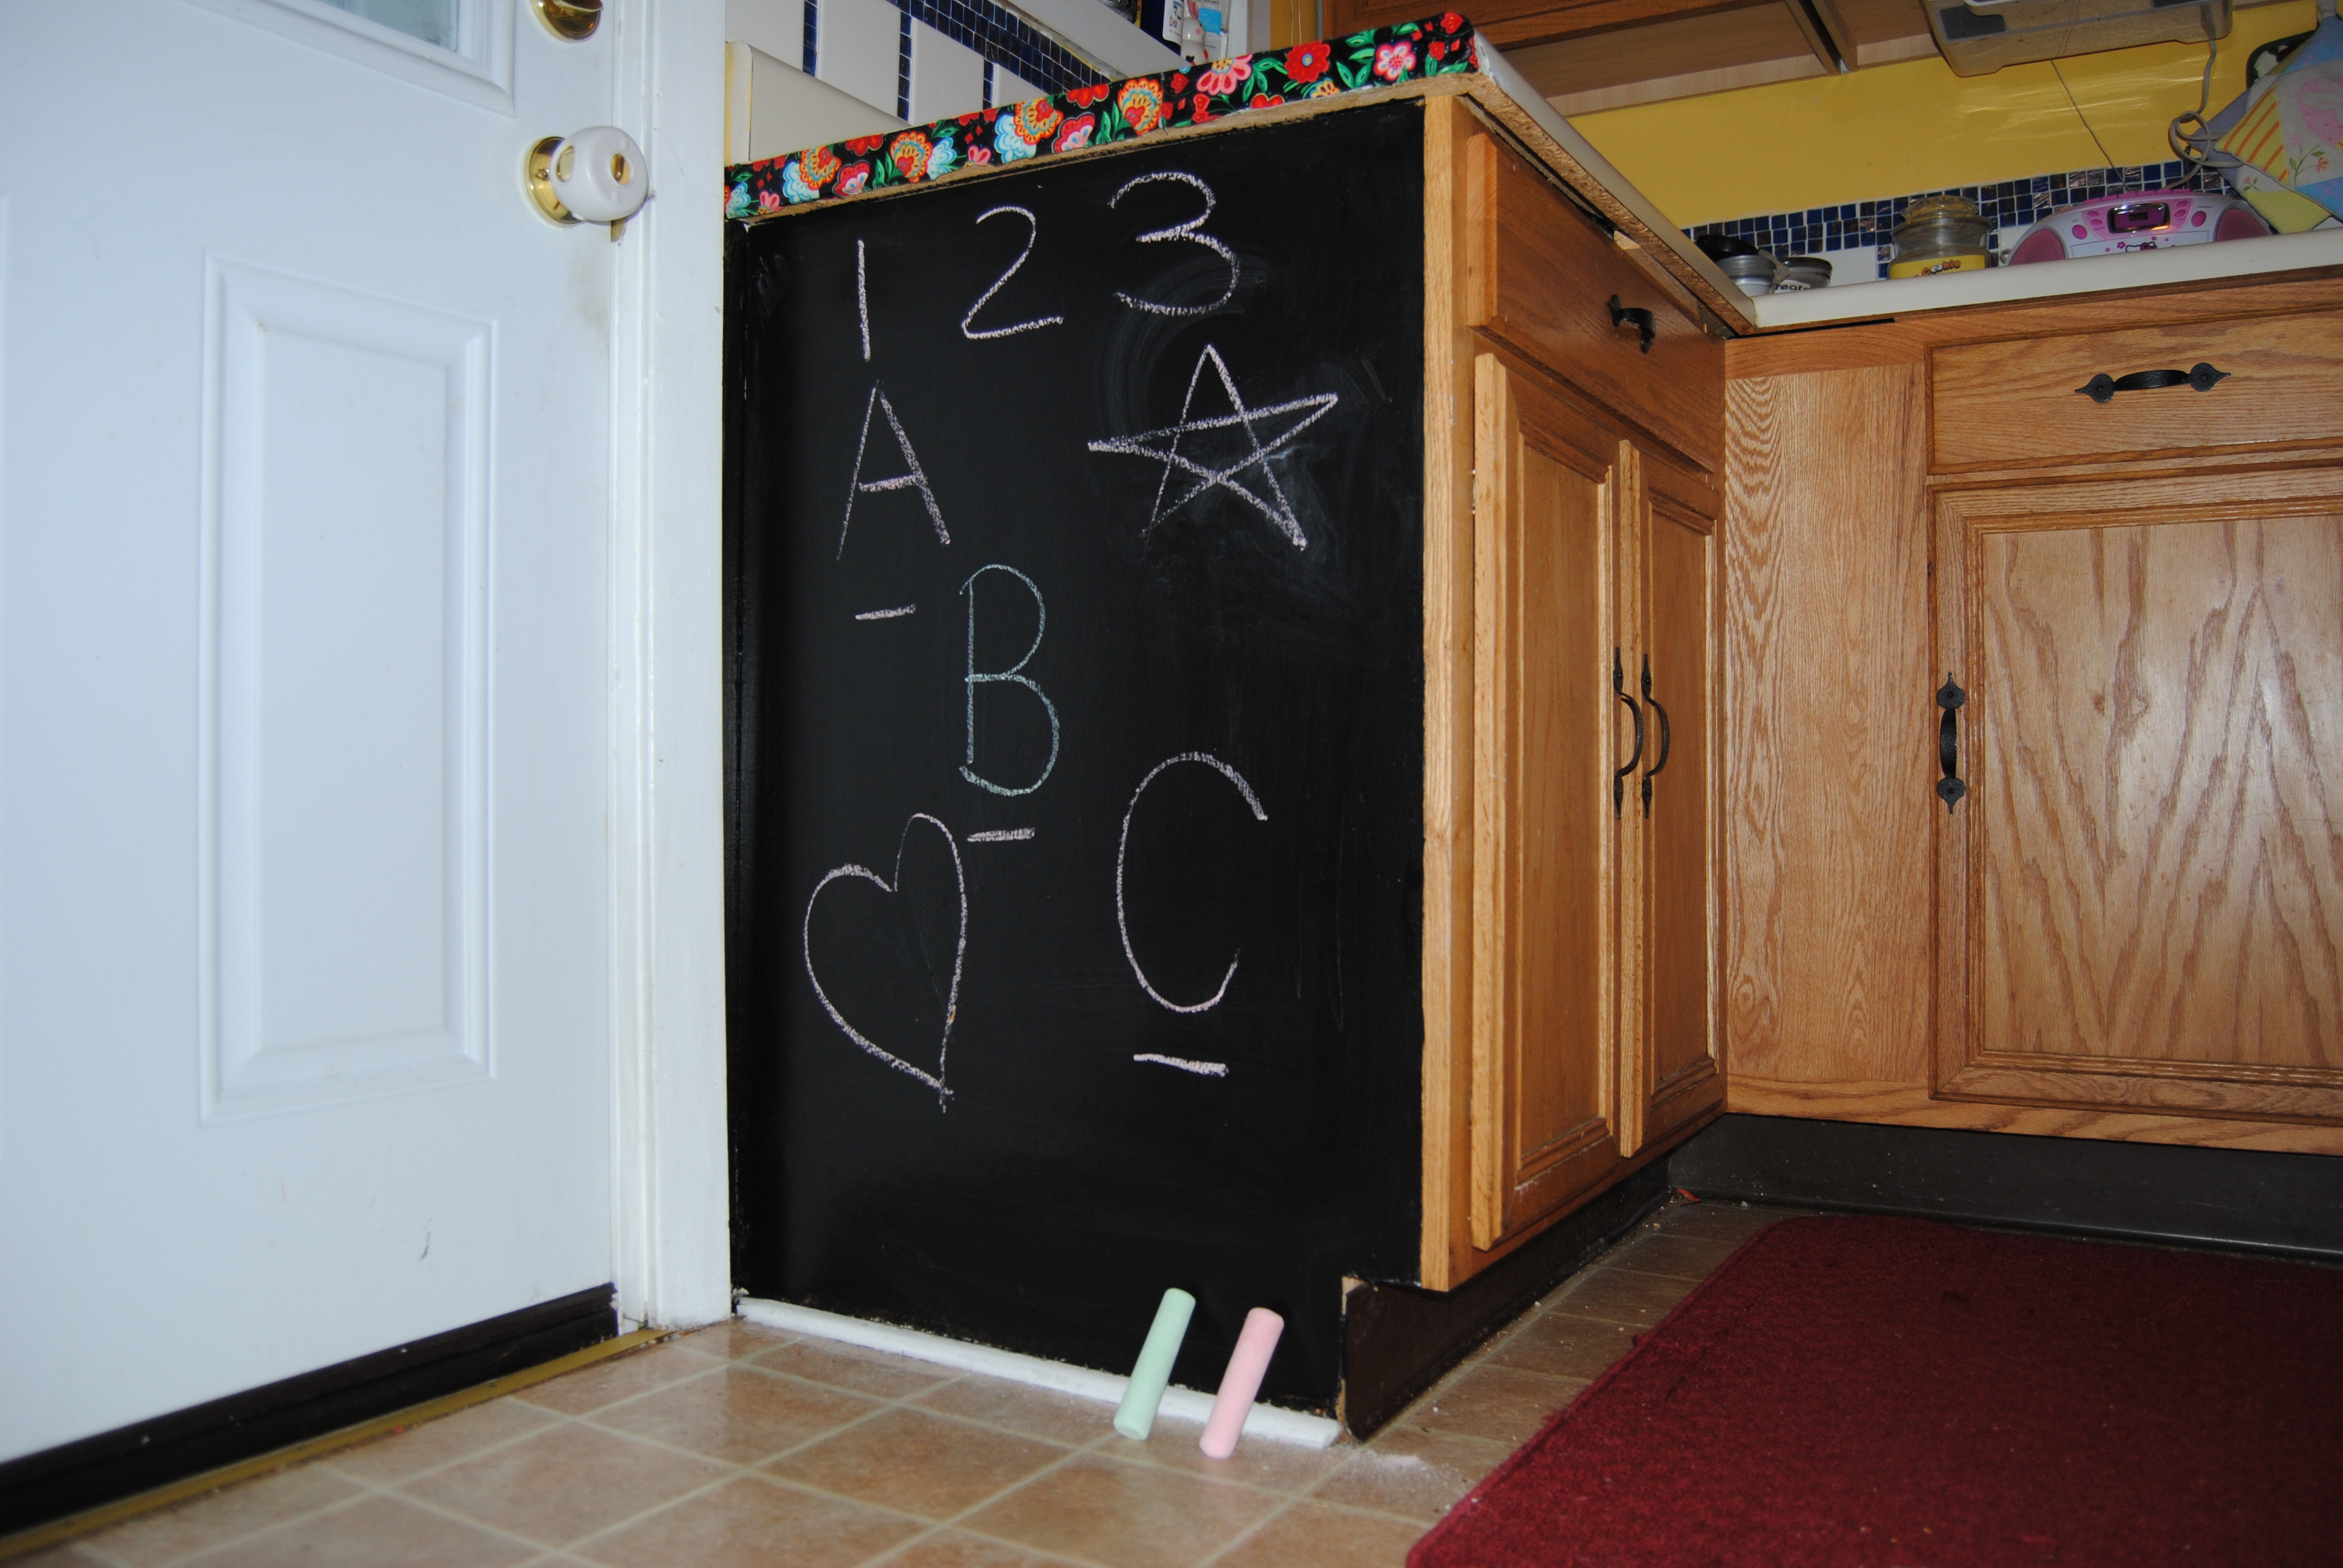 Fun with Chalkboard Paint: Kitchen Cabinet Memo Board